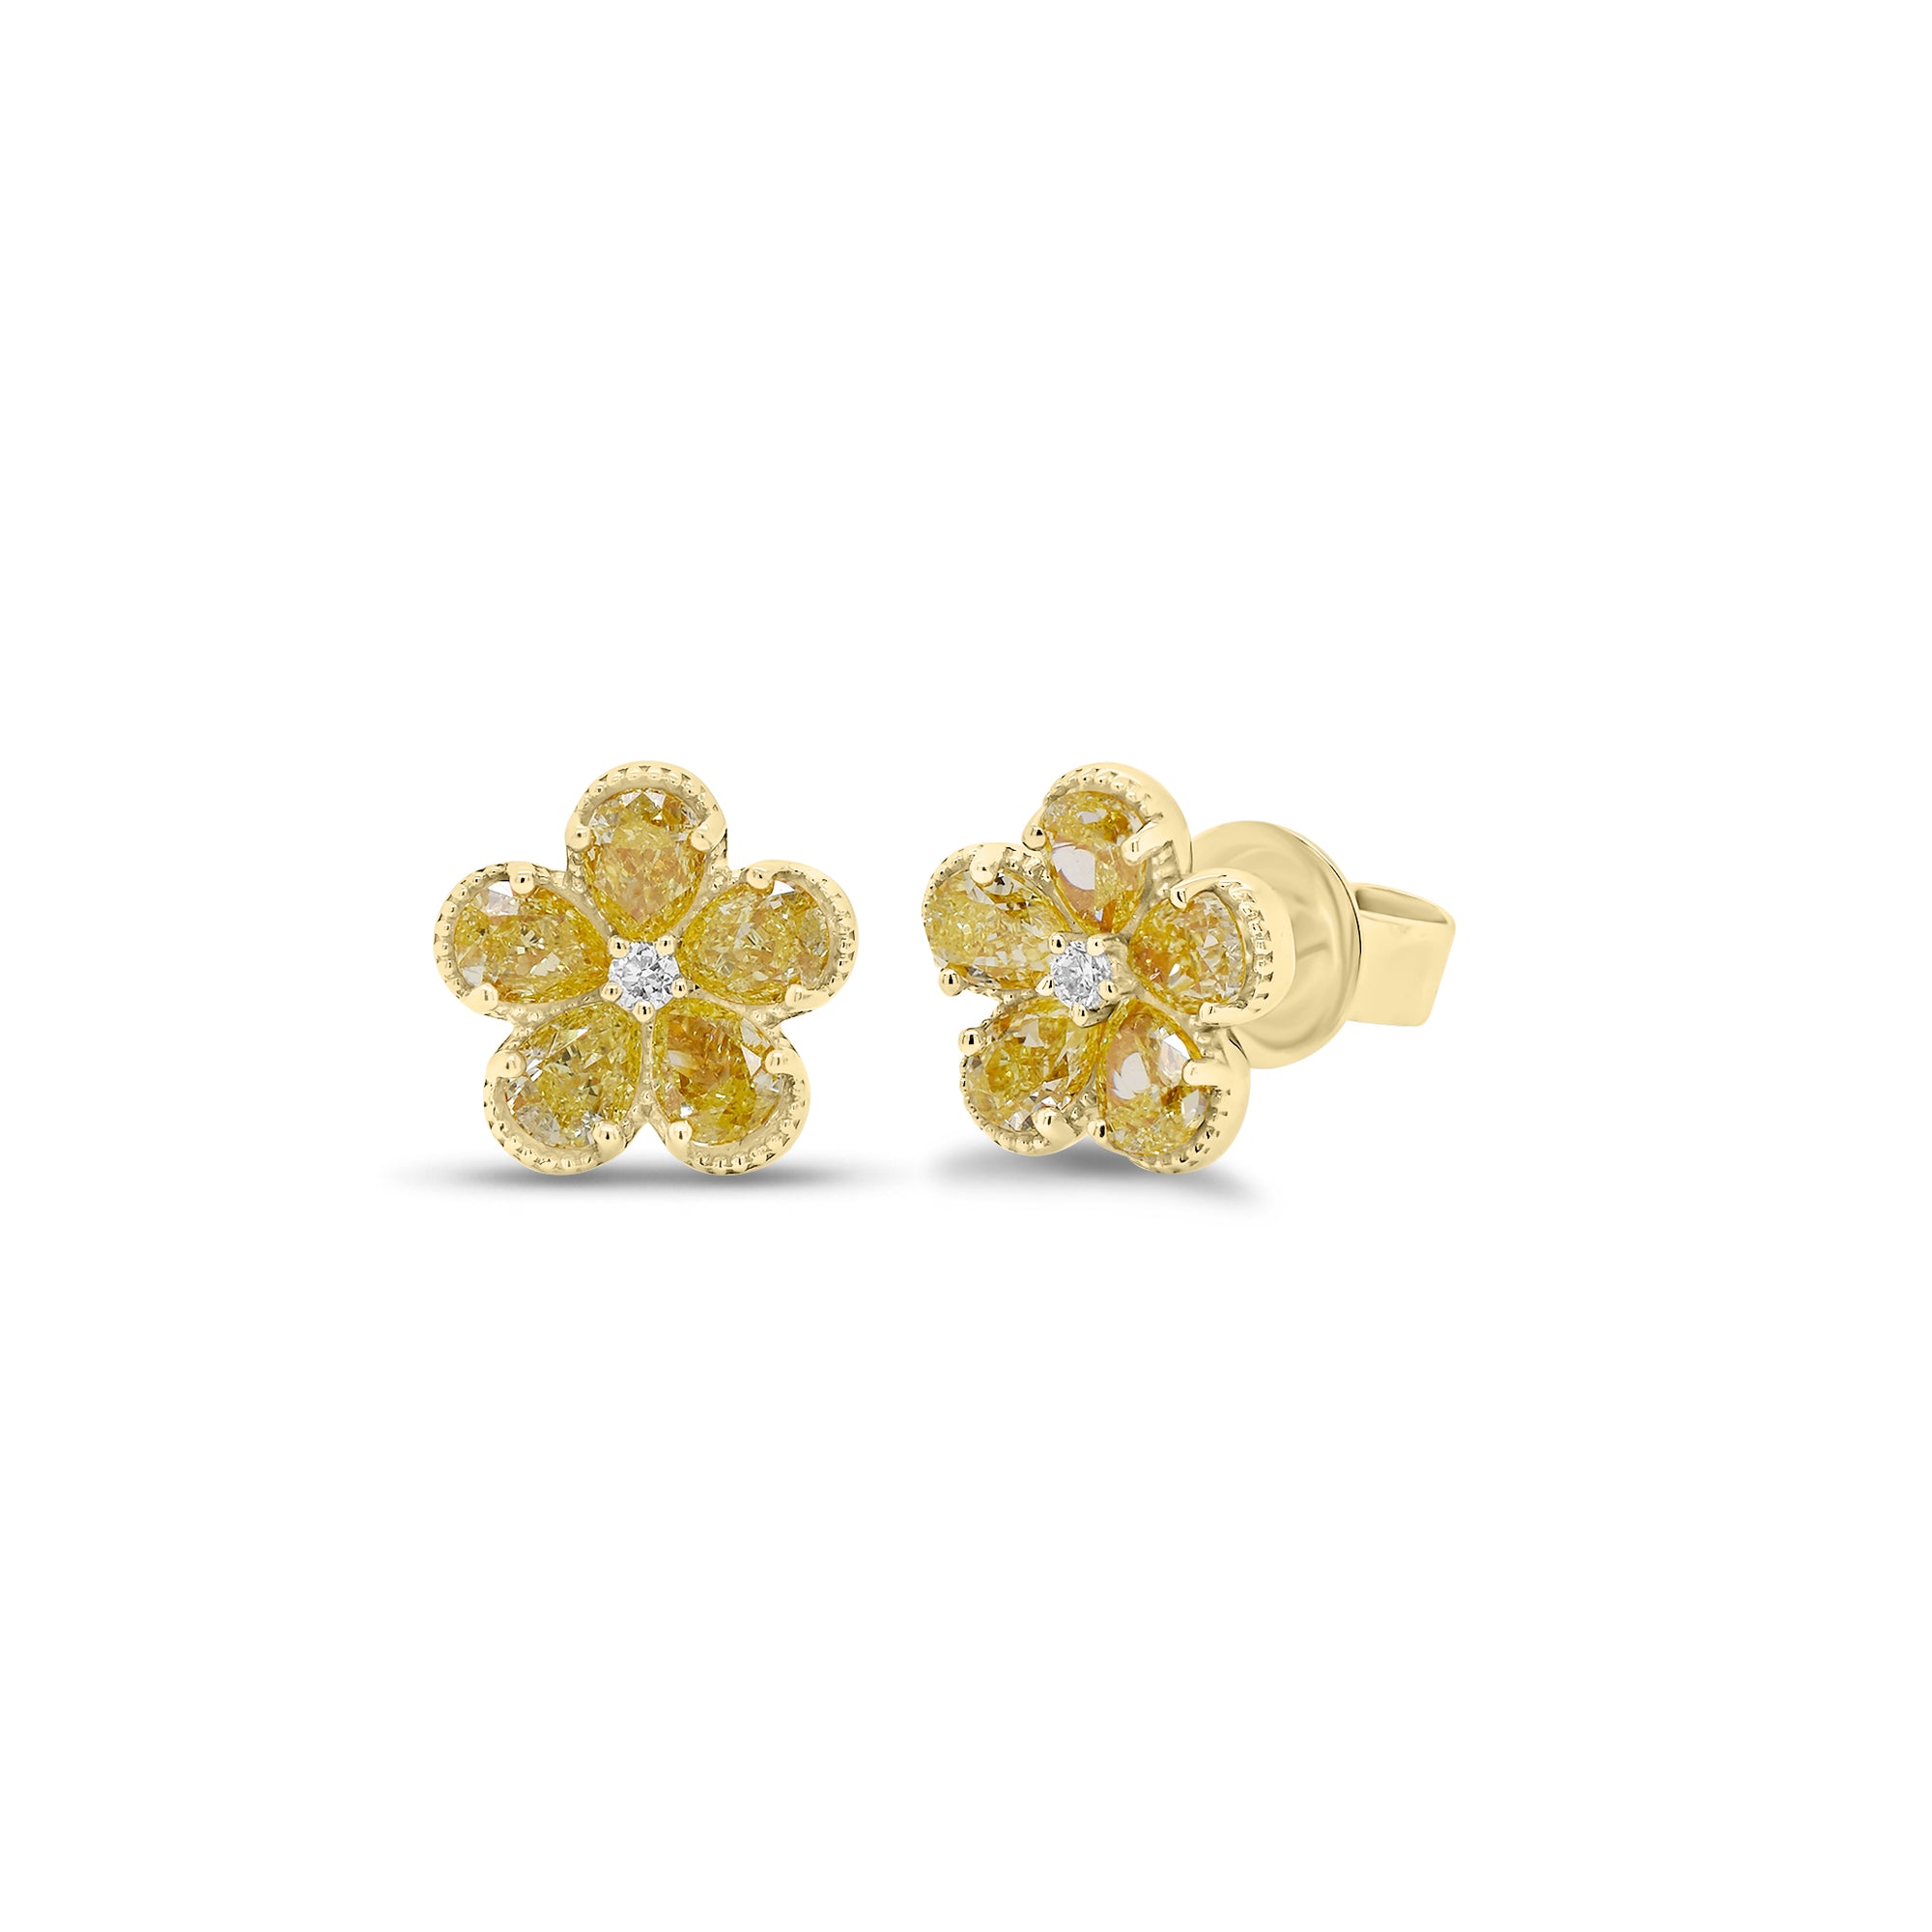 Yellow Diamond Flower Stud Earrings - 18K gold weighing 2.46 grams  - 2 round diamonds weighing 0.03 carats  - 10 yellow pear-shaped diamonds weighing 1.11 carats